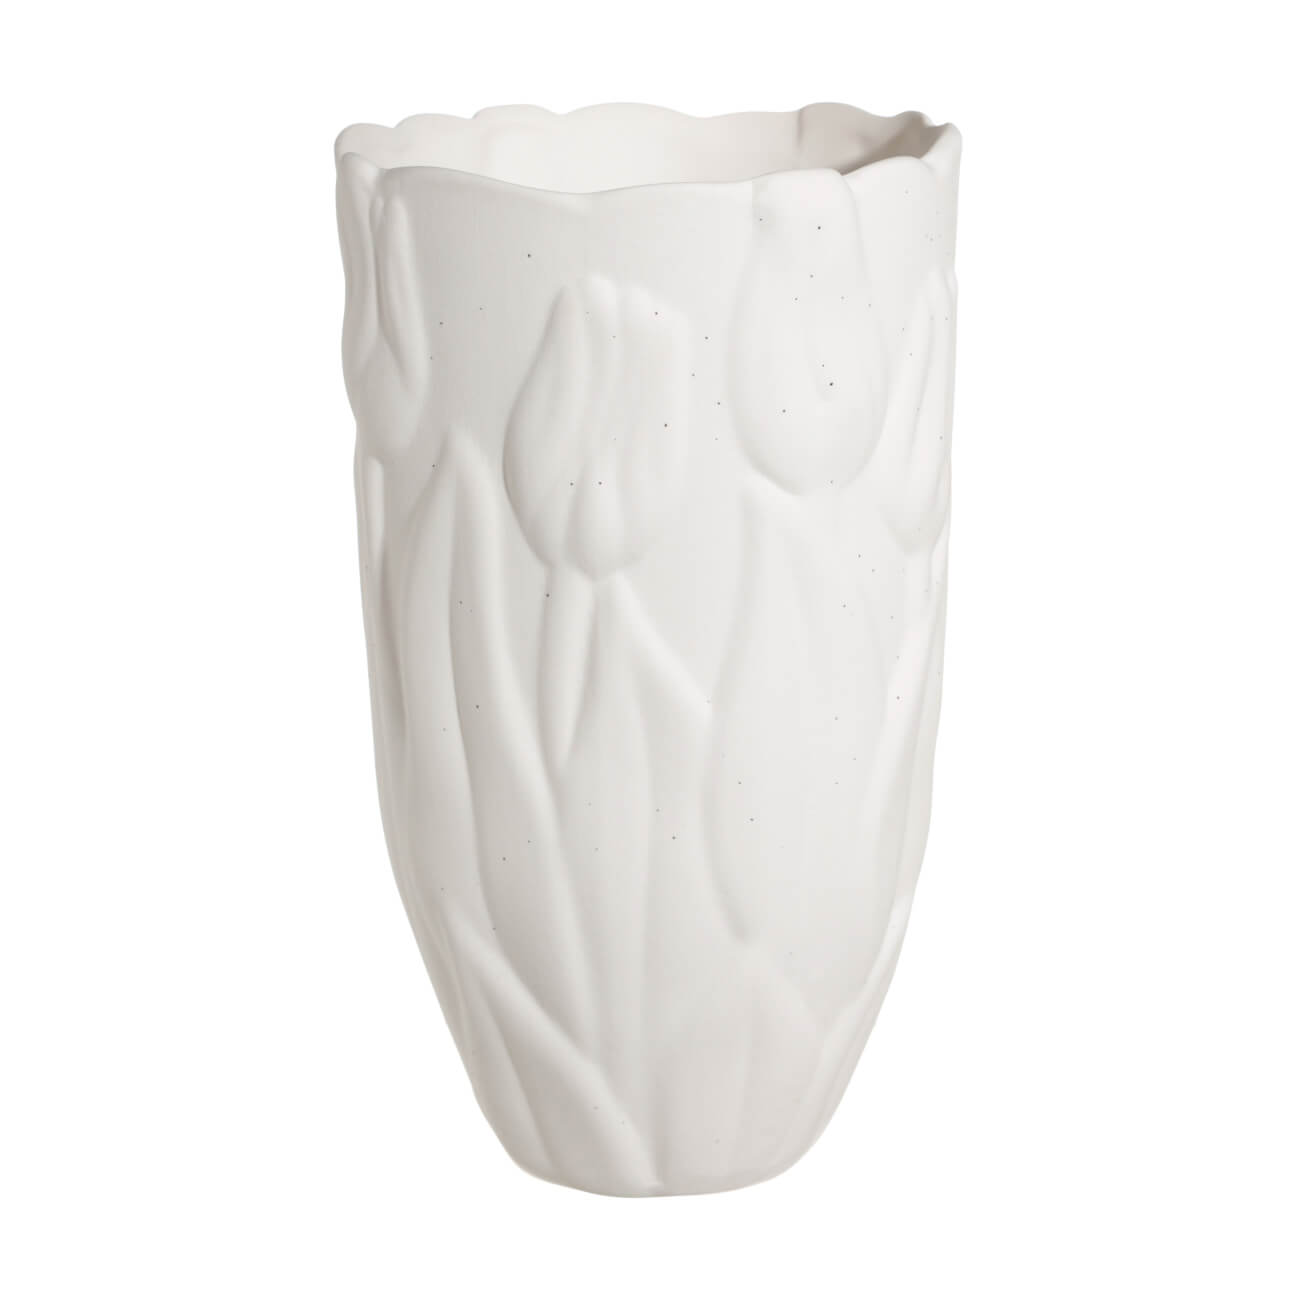 ваза одуванчик гжель фарфор 10 см Ваза для цветов, 20 см, декоративная, фарфор P, белая, в крапинку, Тюльпаны, Tulip